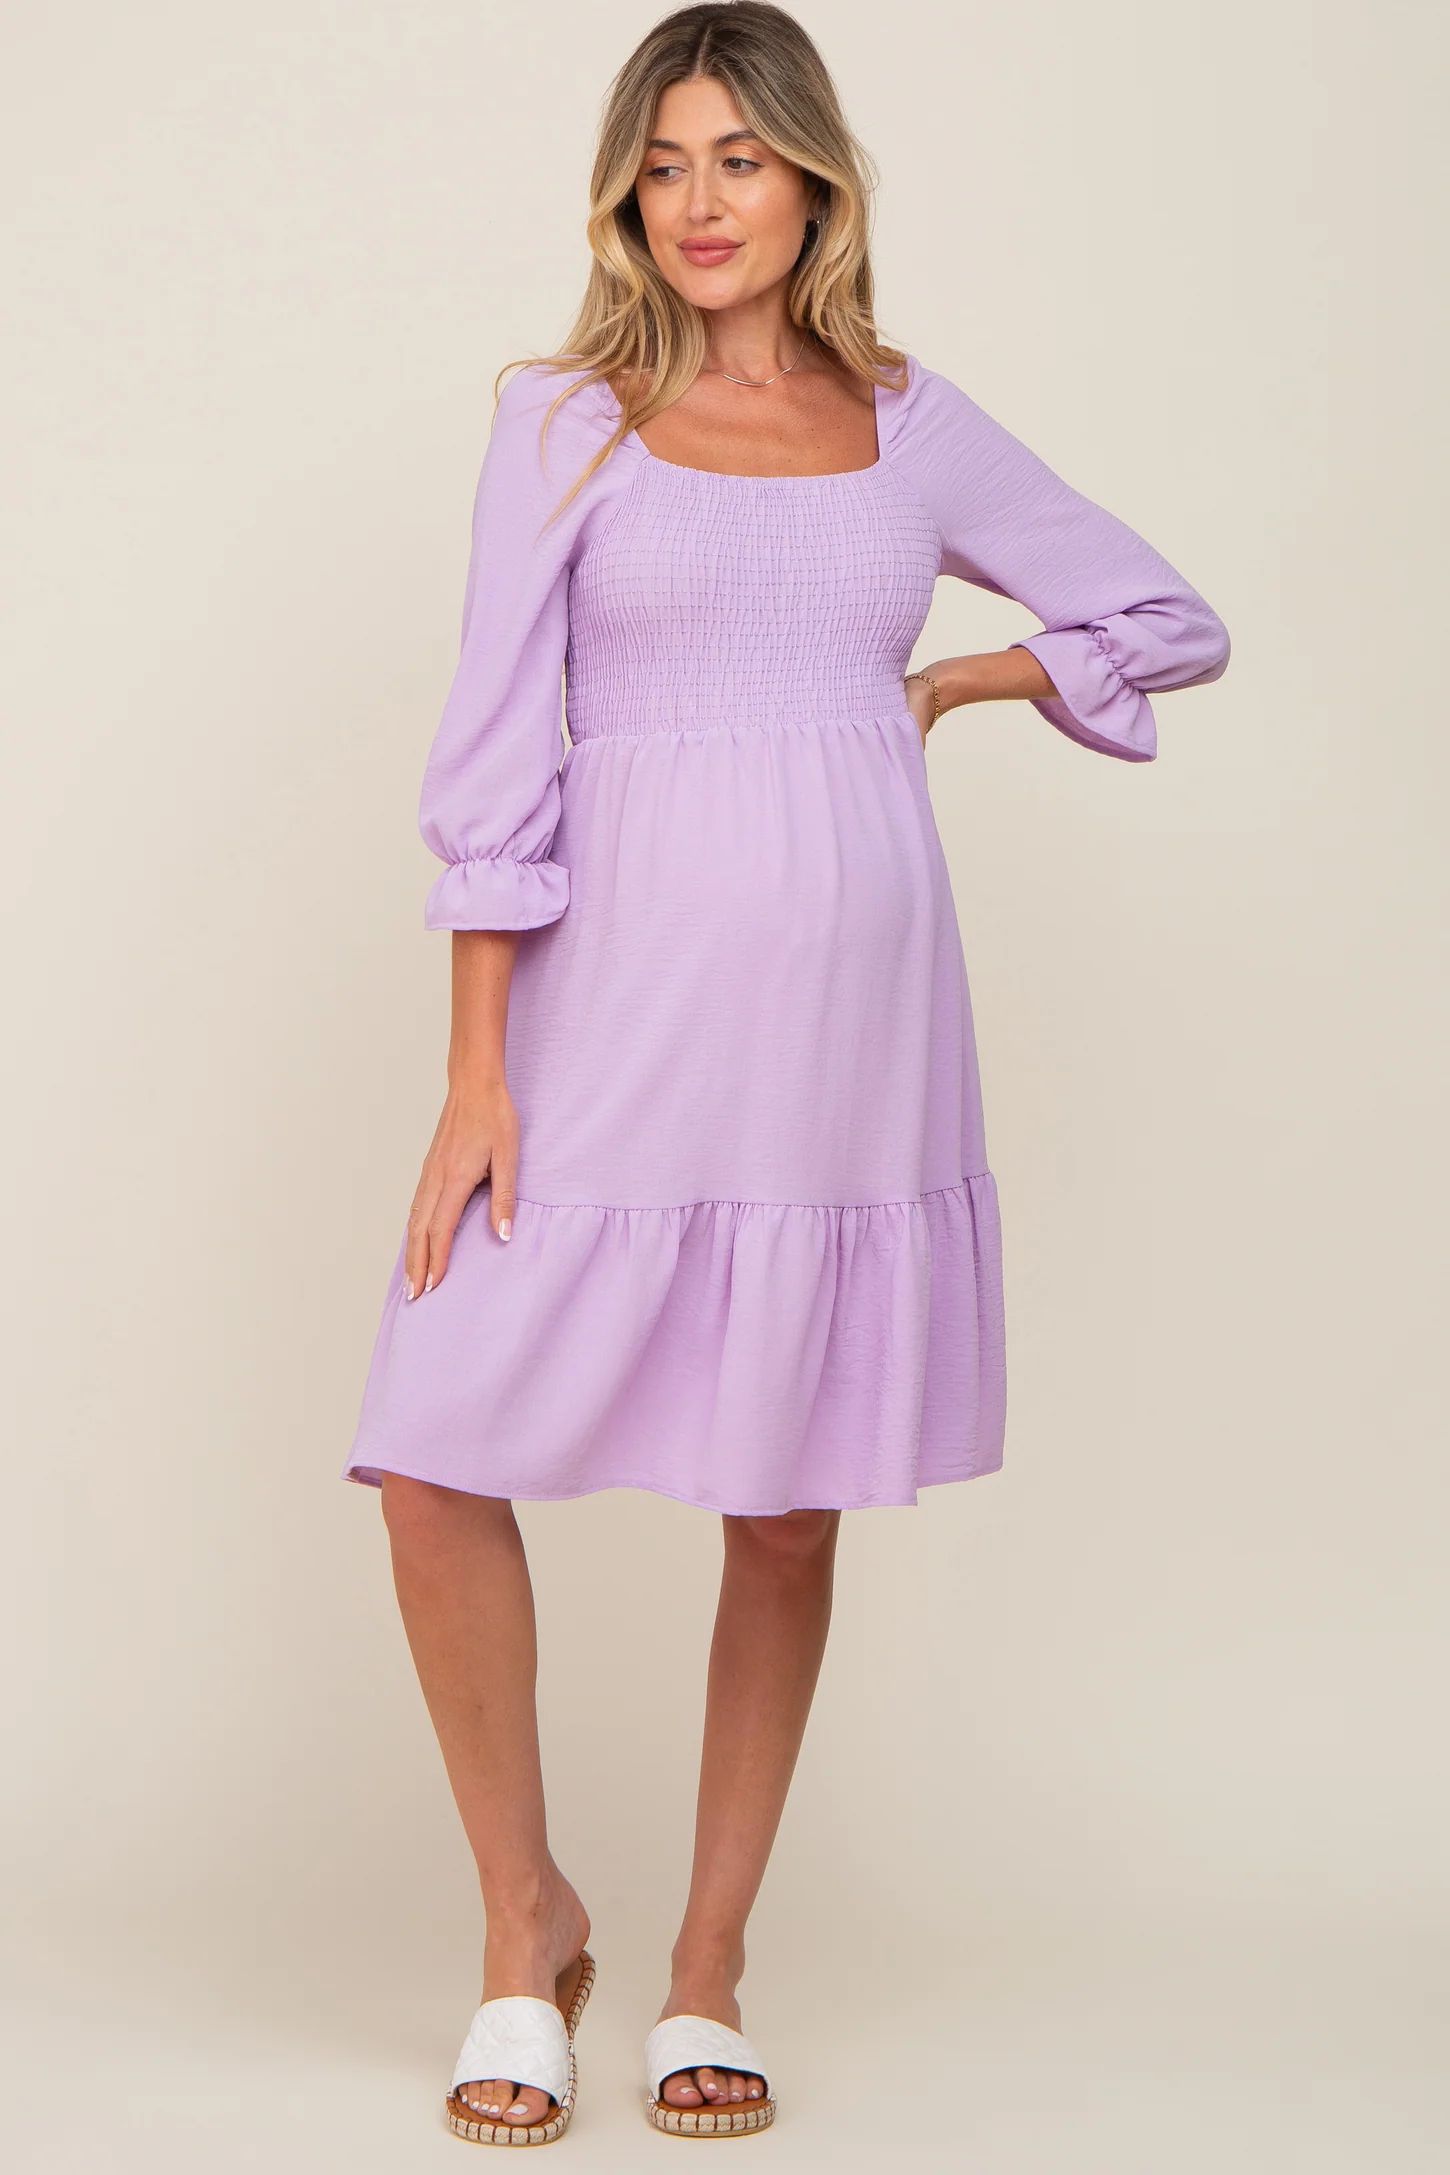 Lavender Smocked Ruffle Maternity Dress | PinkBlush Maternity